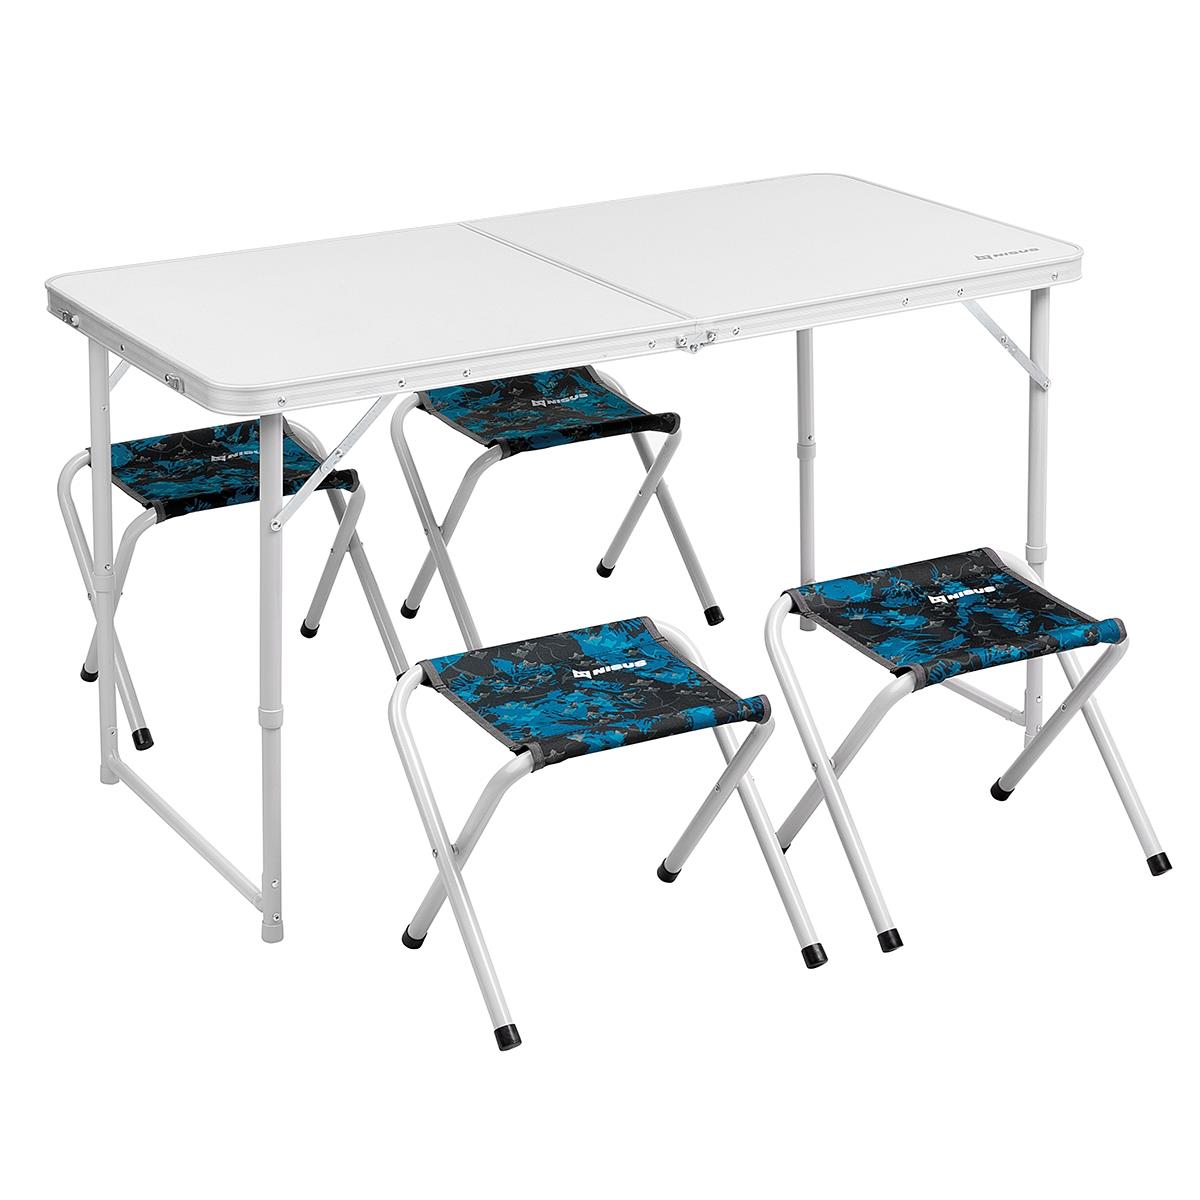 Набор мебели, стол + 4 табурета SHARK (N-FS-21407+21124AS)  пр-во Тонар Nisus технореал стол координатный алюминиевый с прижимами 330x95 мм ма320352011